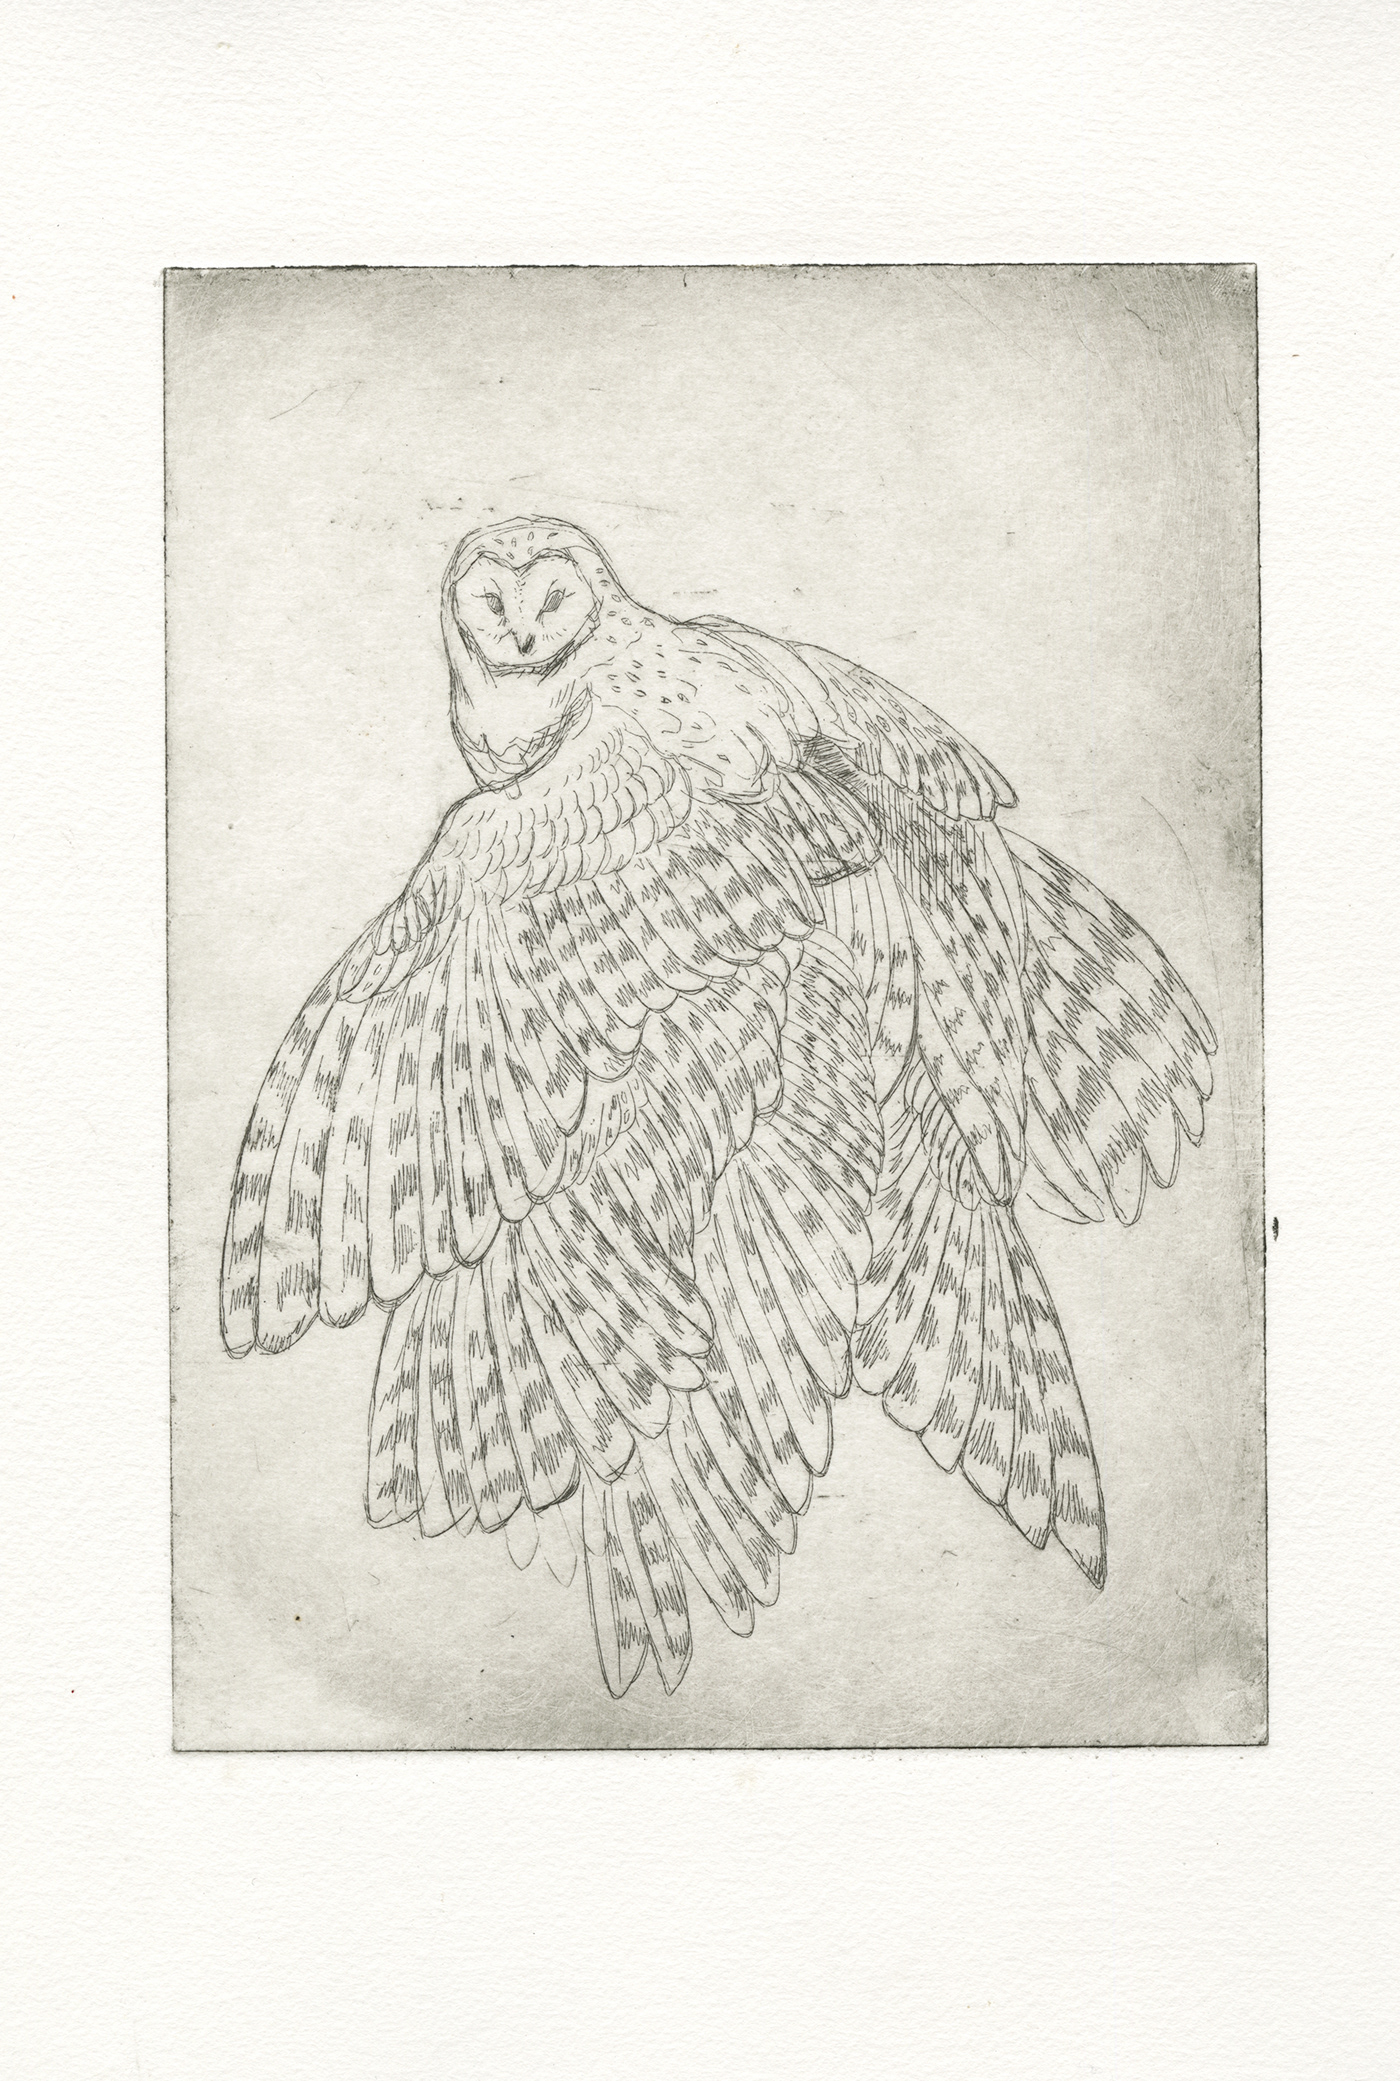 prints printmaking birds owls egrets chickens Patterns dramatic surreal deer